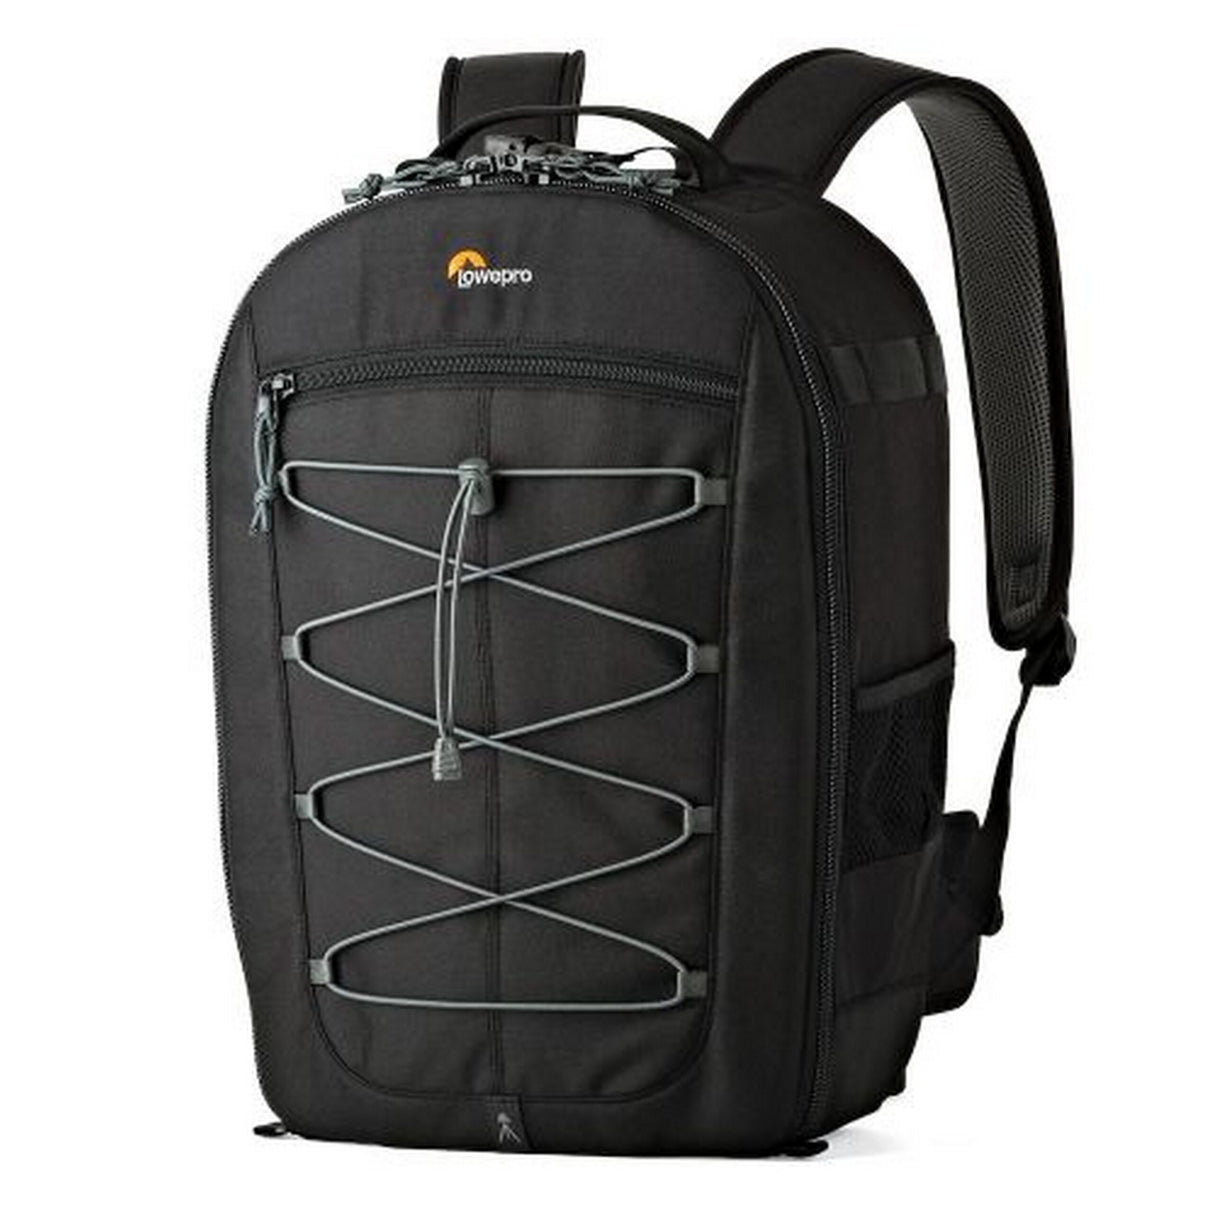 Lowepro Photo Classic BP 300 AW Camera Backpack, Black (LP36975)